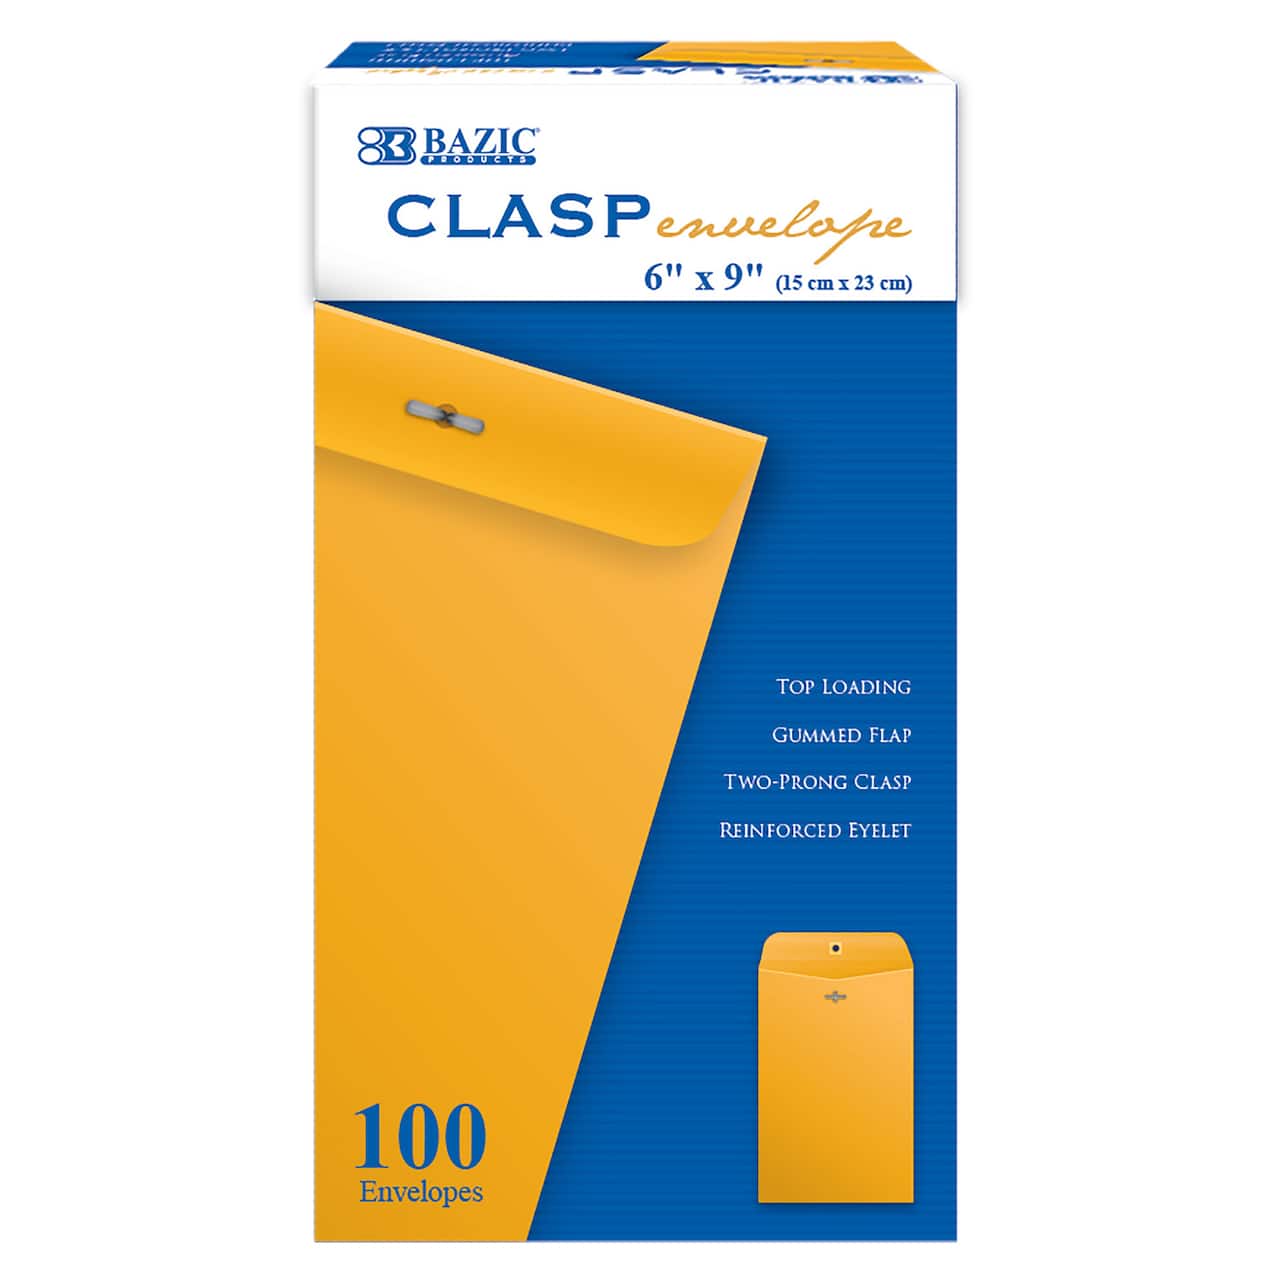 BAZIC&#xAE; Clasp Envelopes, 100ct.